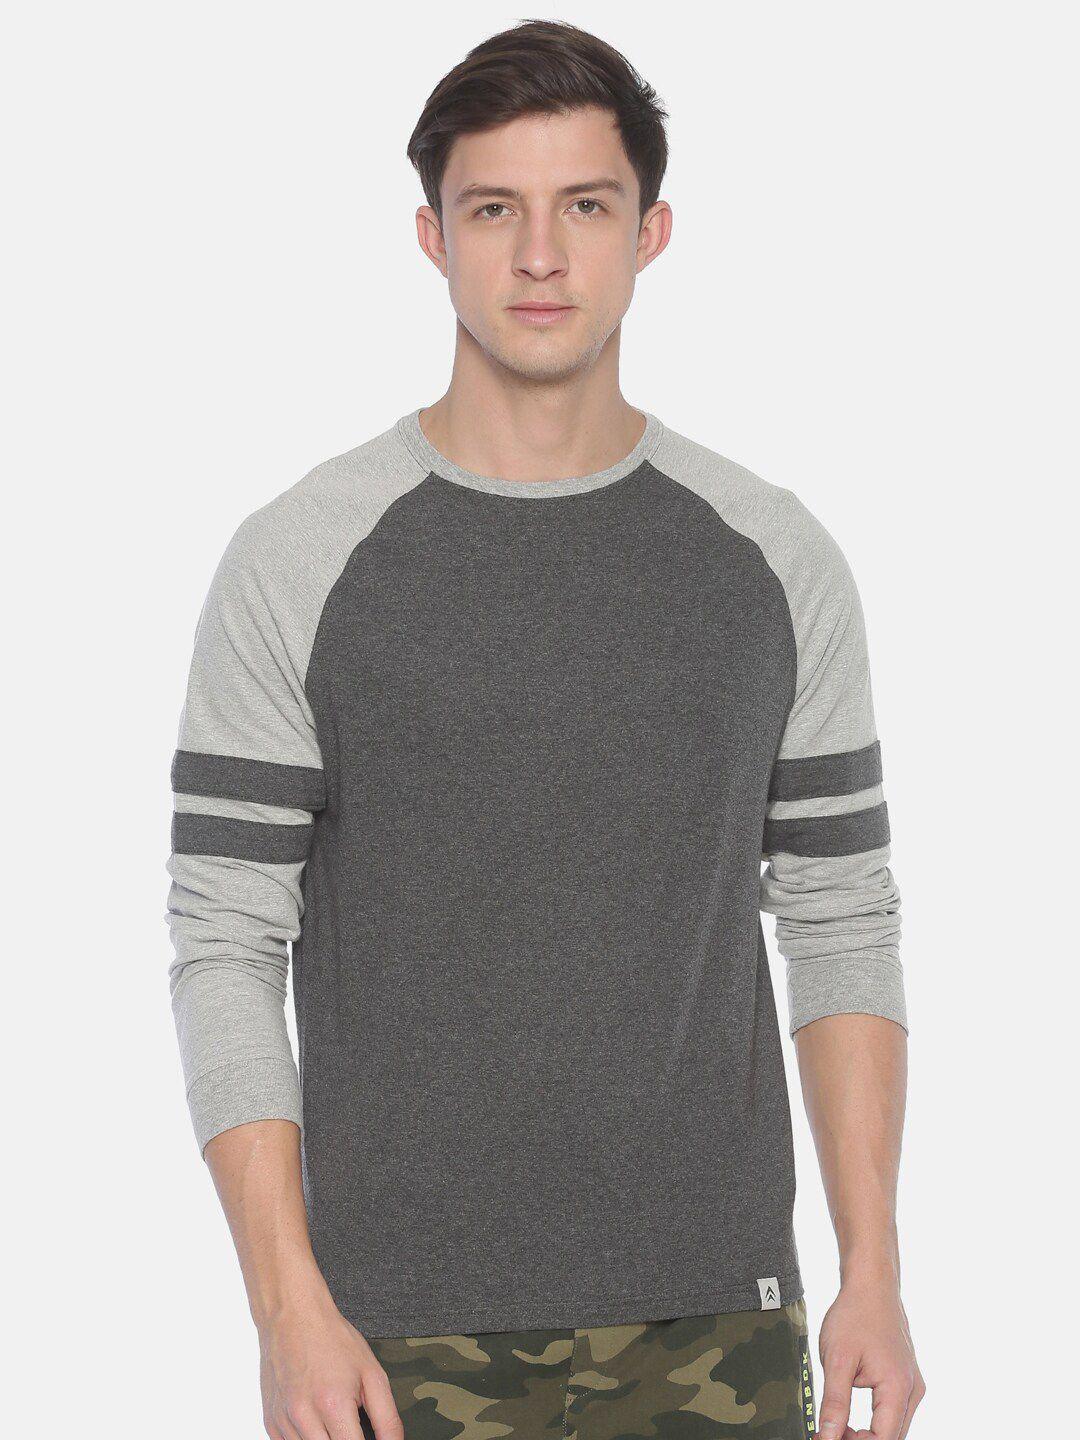 steenbok-men-grey-melange-colourblocked-applique-t-shirt